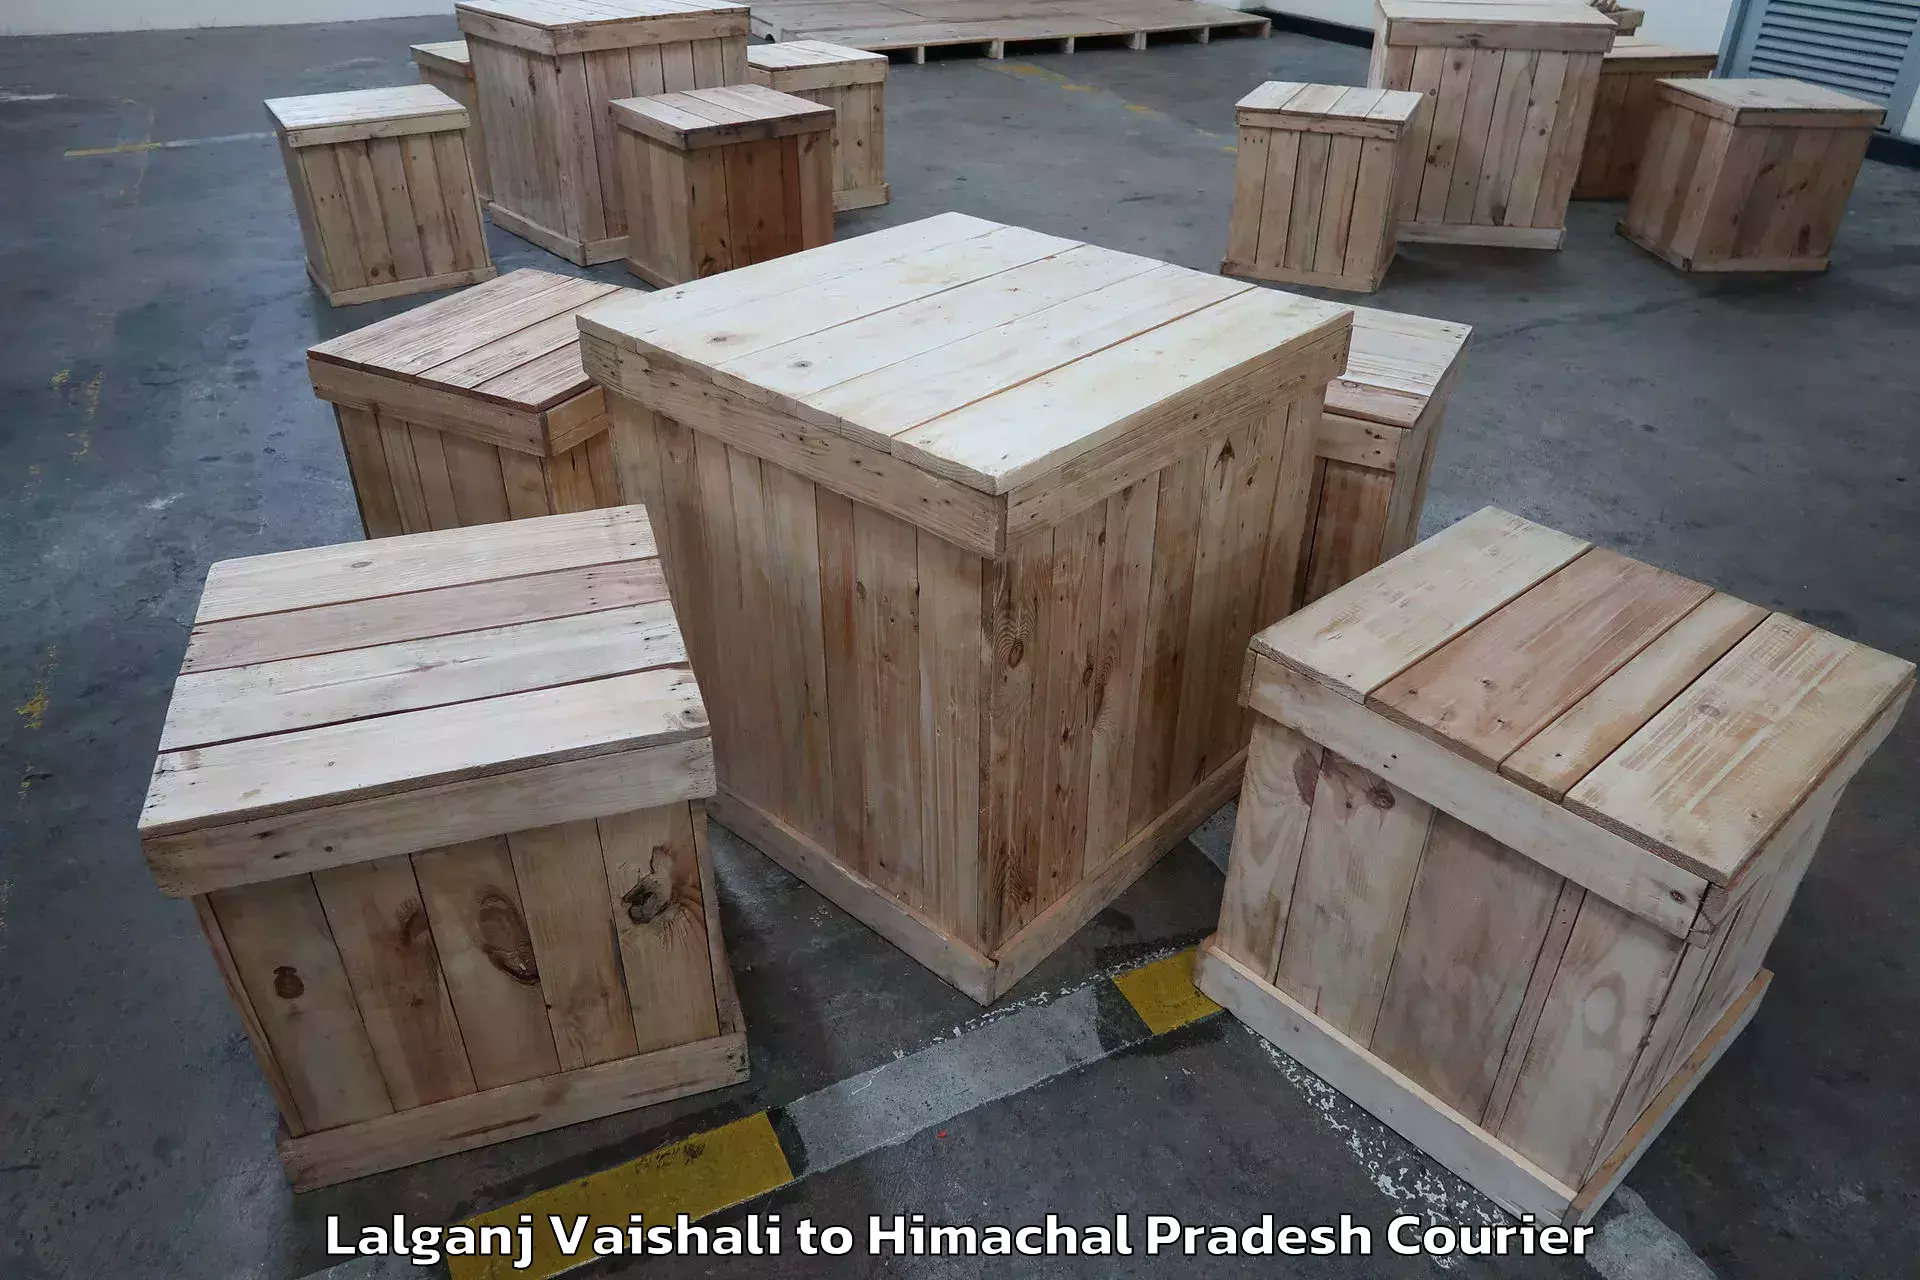 Specialized moving company Lalganj Vaishali to Himachal Pradesh